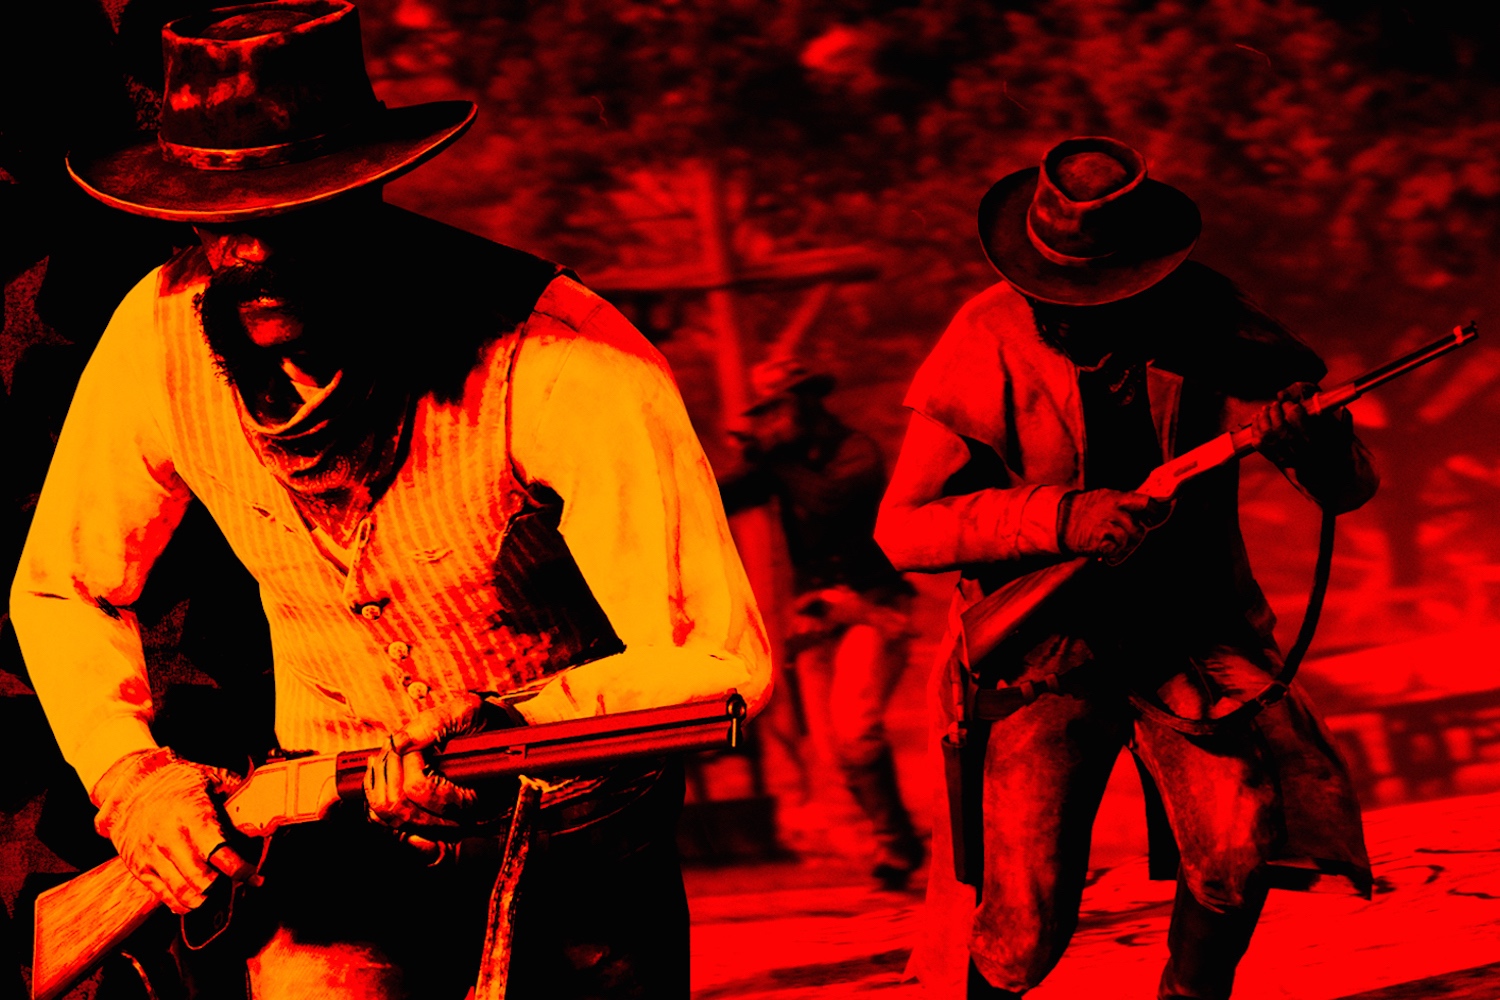 read dead online beta gun rush update red dead online rockstar games